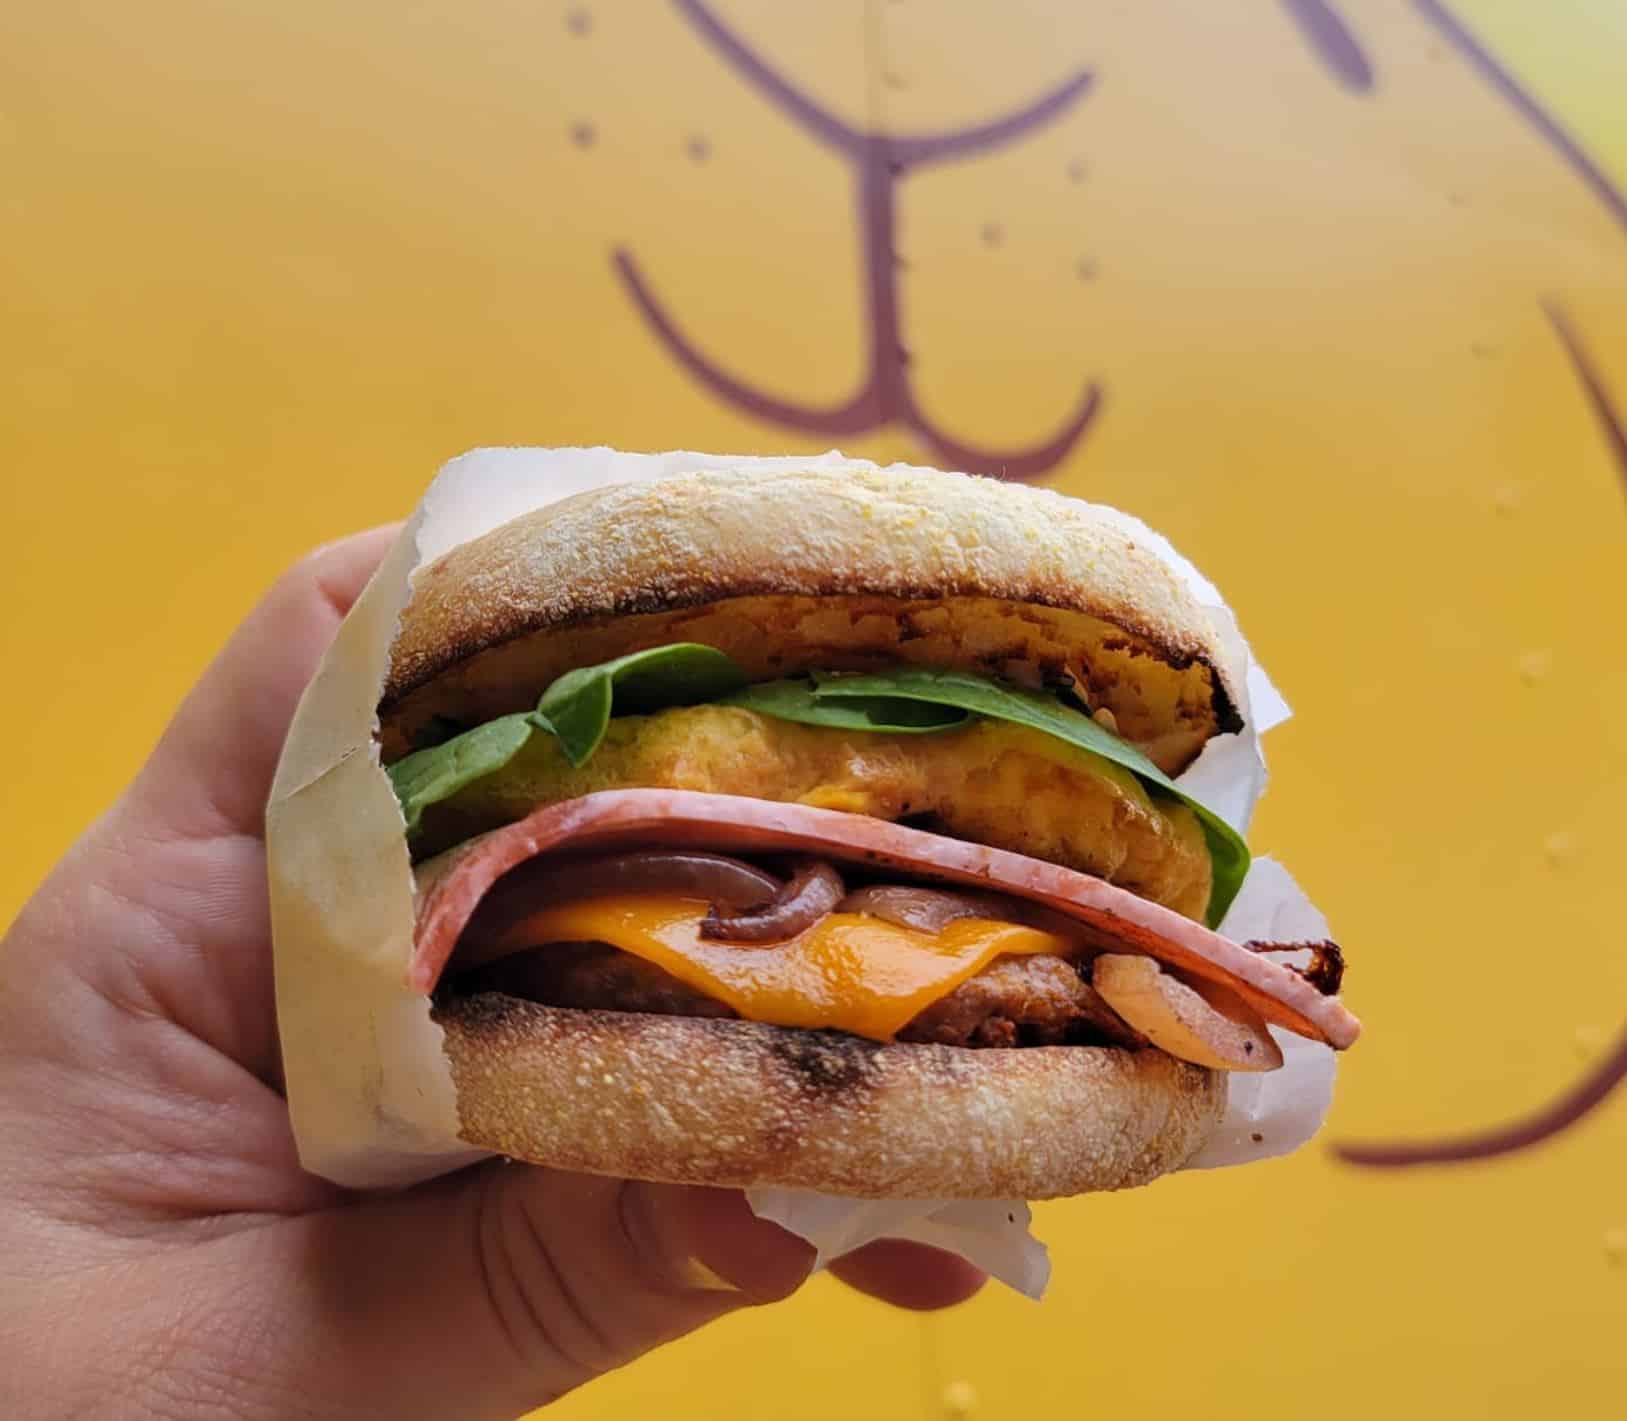 A vegan sandwich from Chubby Bunny in Portland.